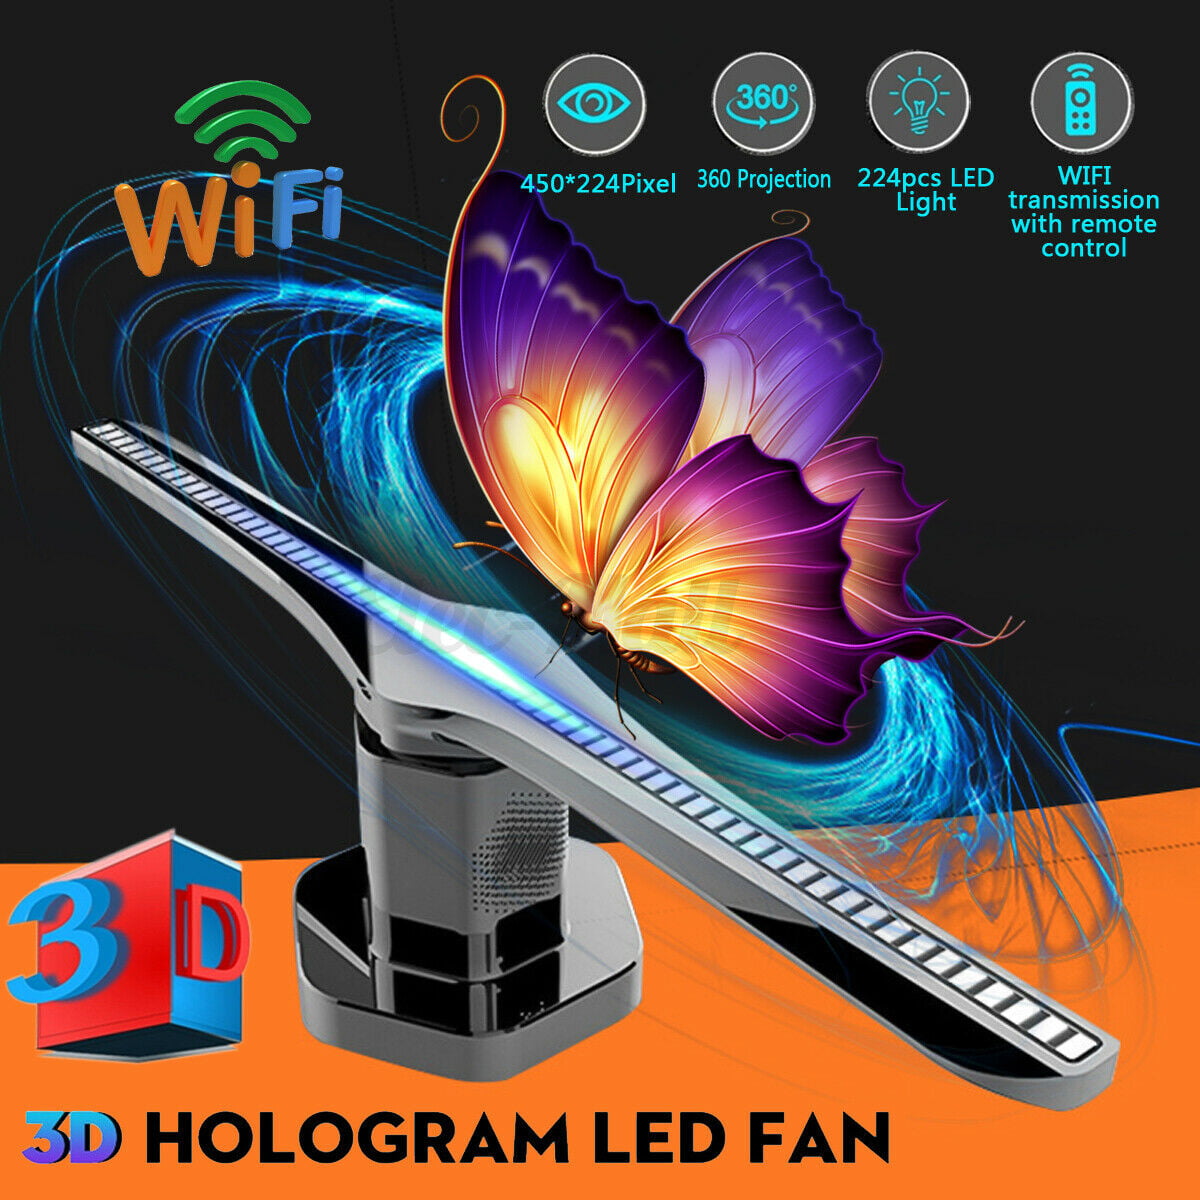 Portable 3D LED Holographic Display LED Fan Hologram 